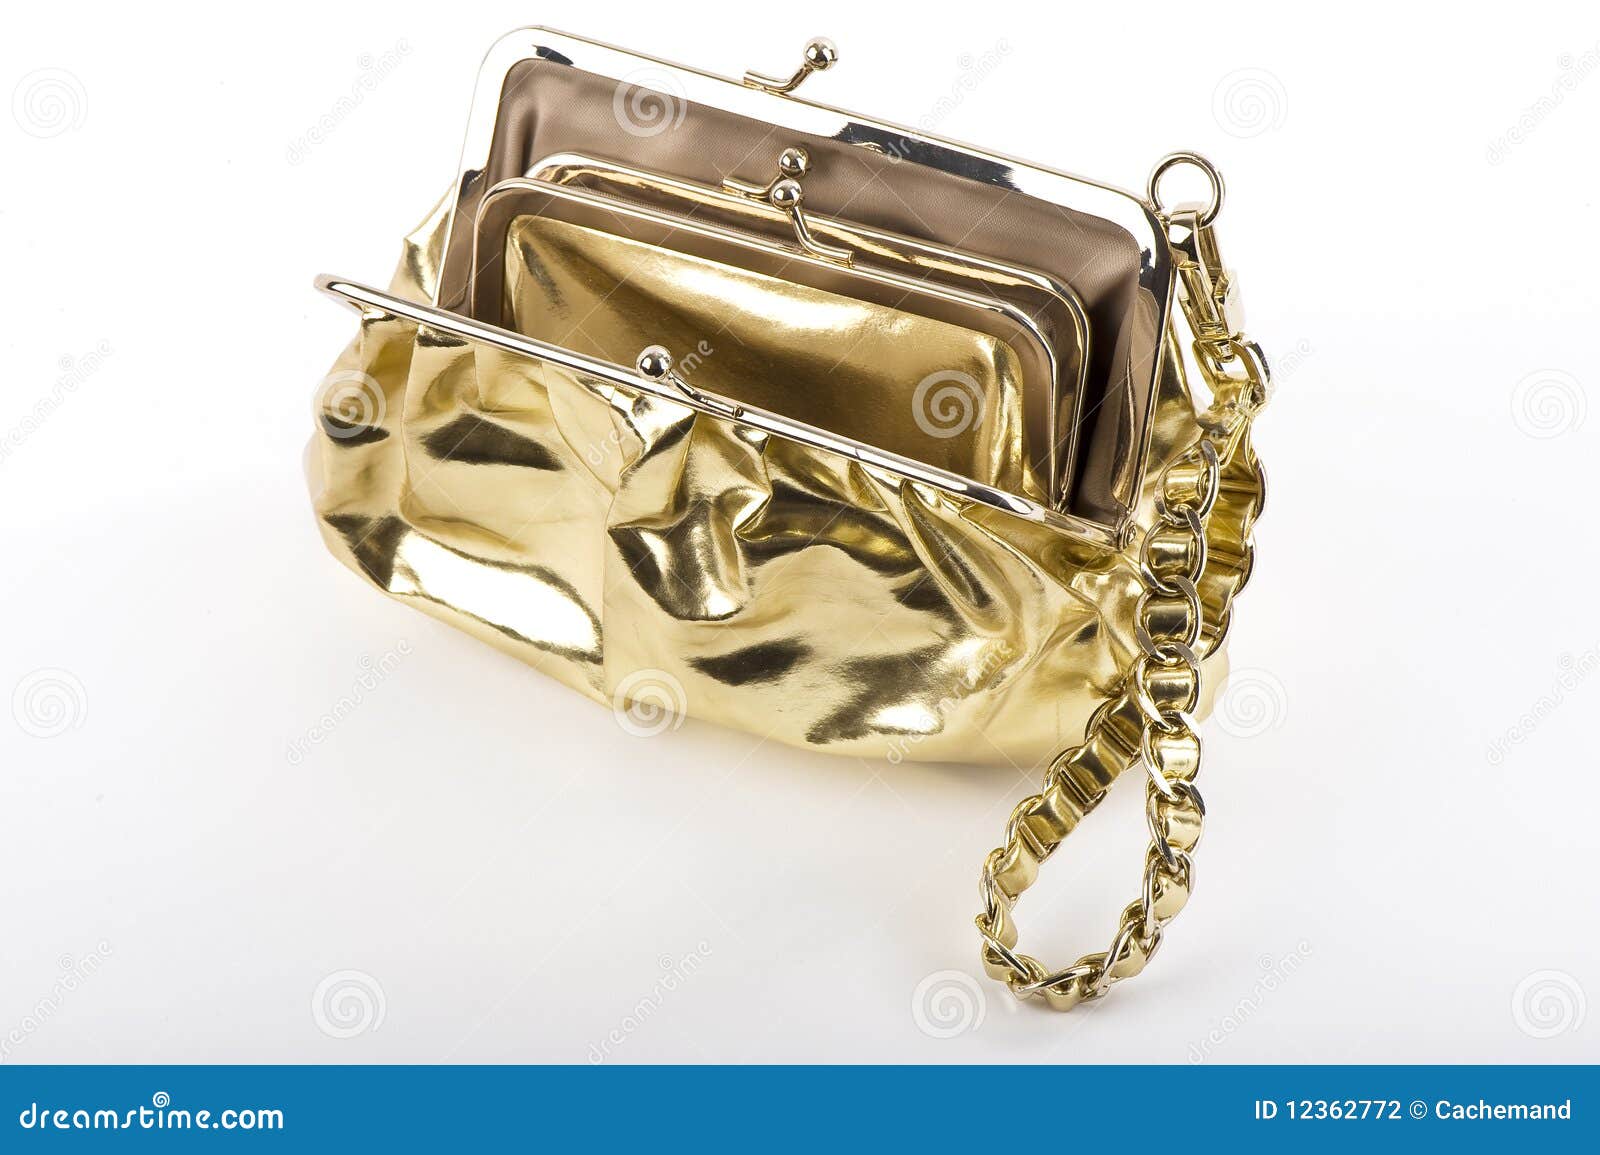 3,584 Golden Handbag Stock Photos - Free & Royalty-Free Stock